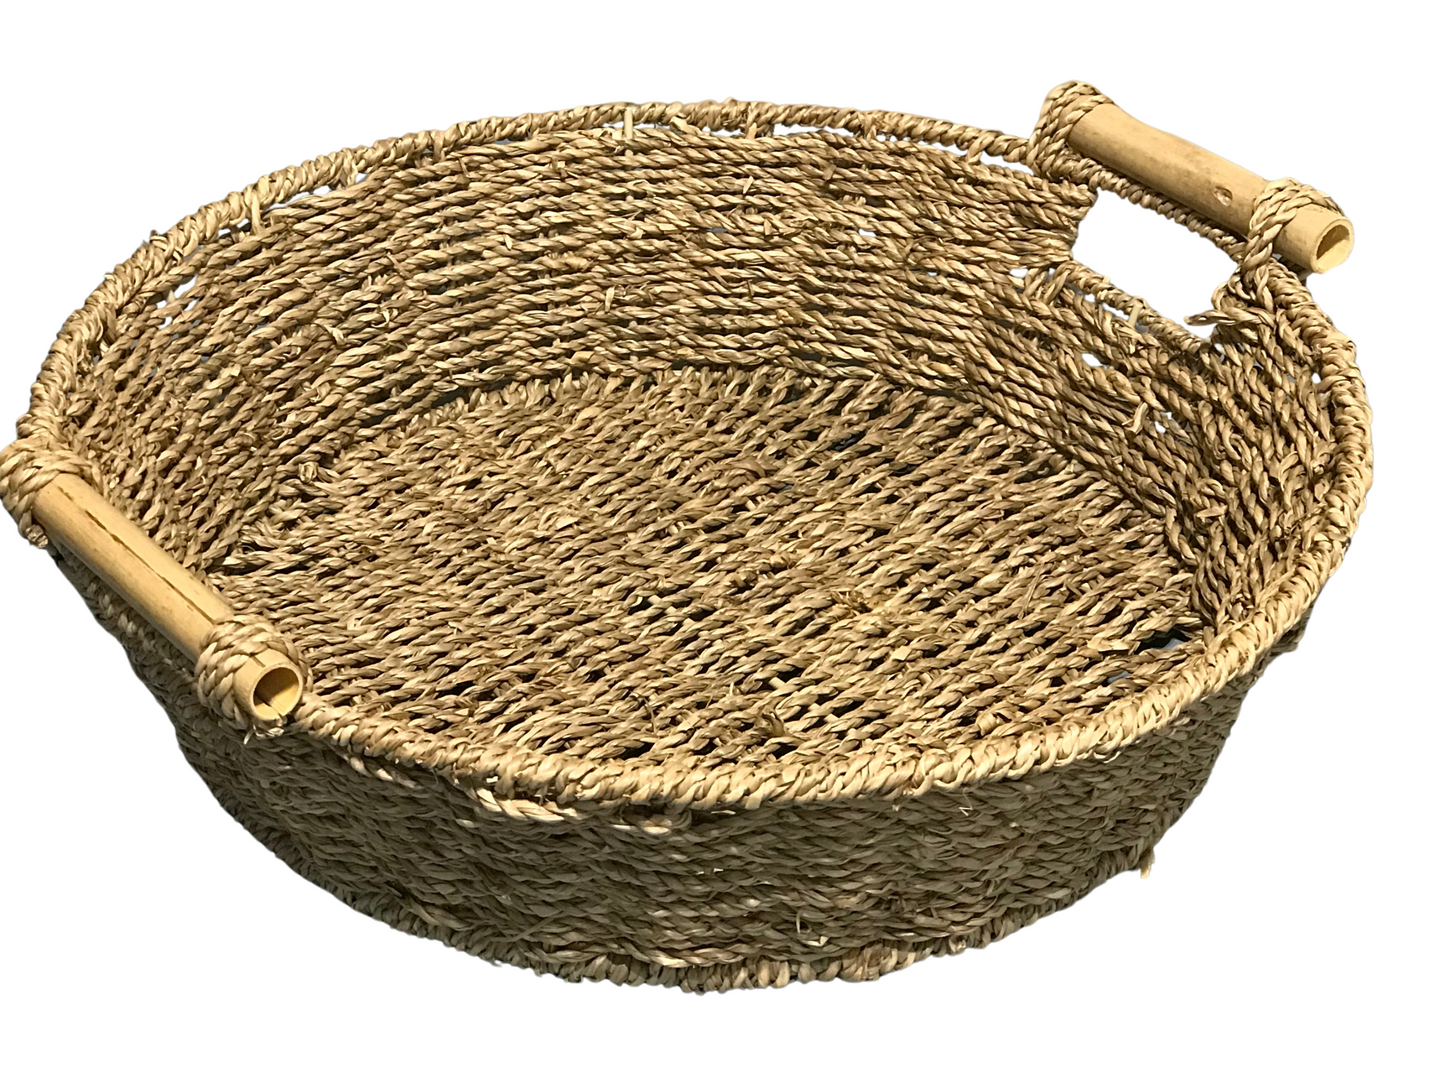 Seagrass Woven Round Basket